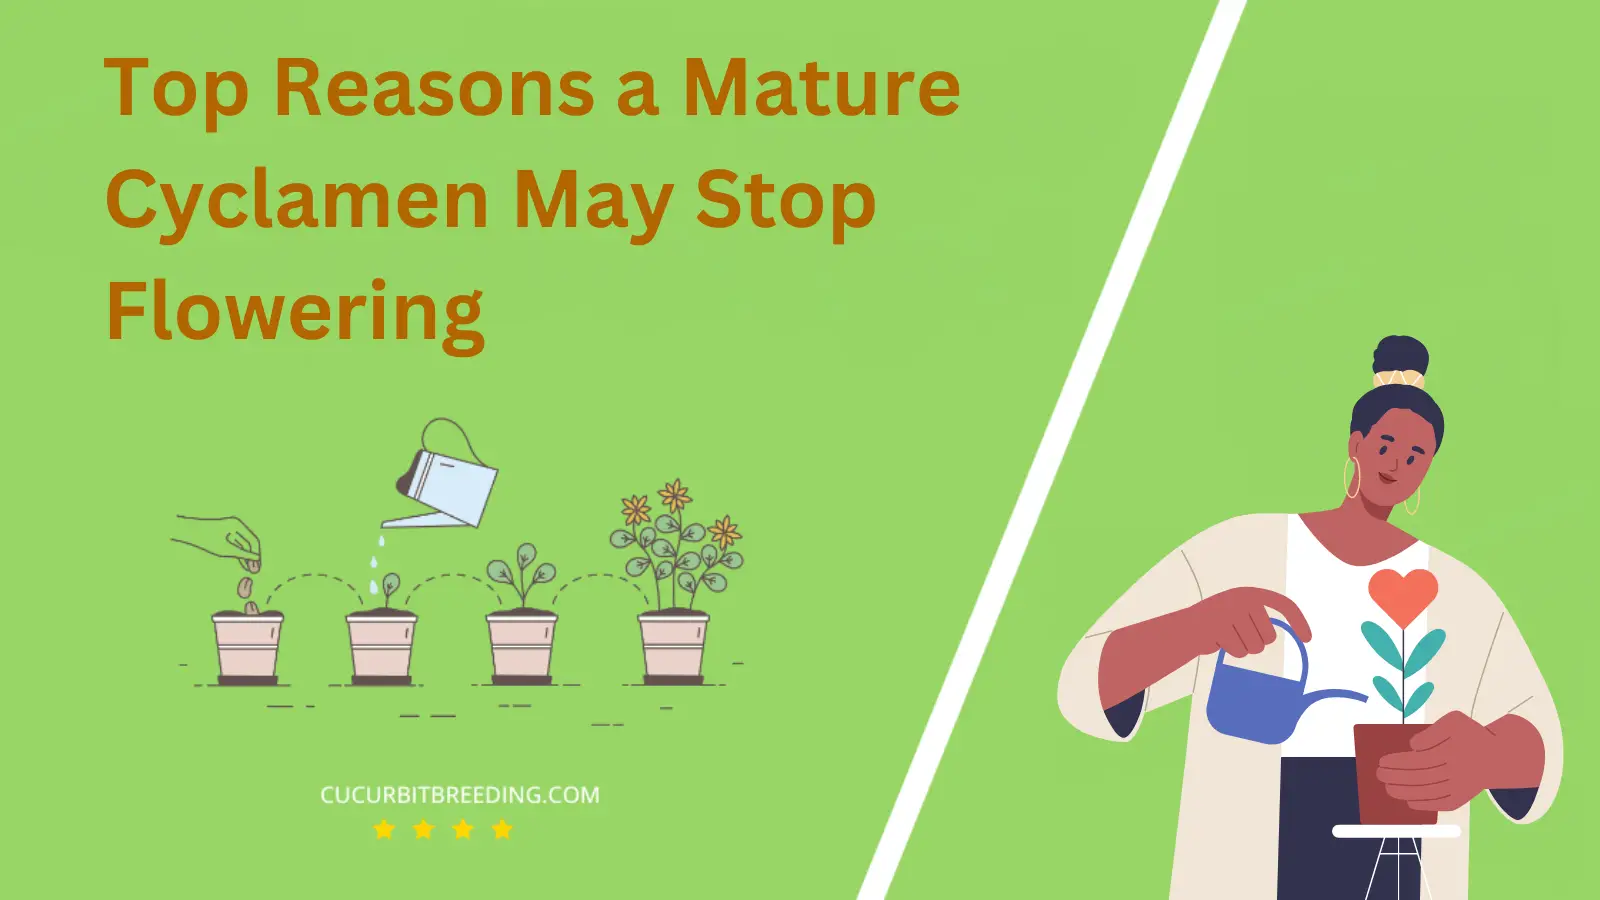 Top Reasons a Mature Cyclamen May Stop Flowering